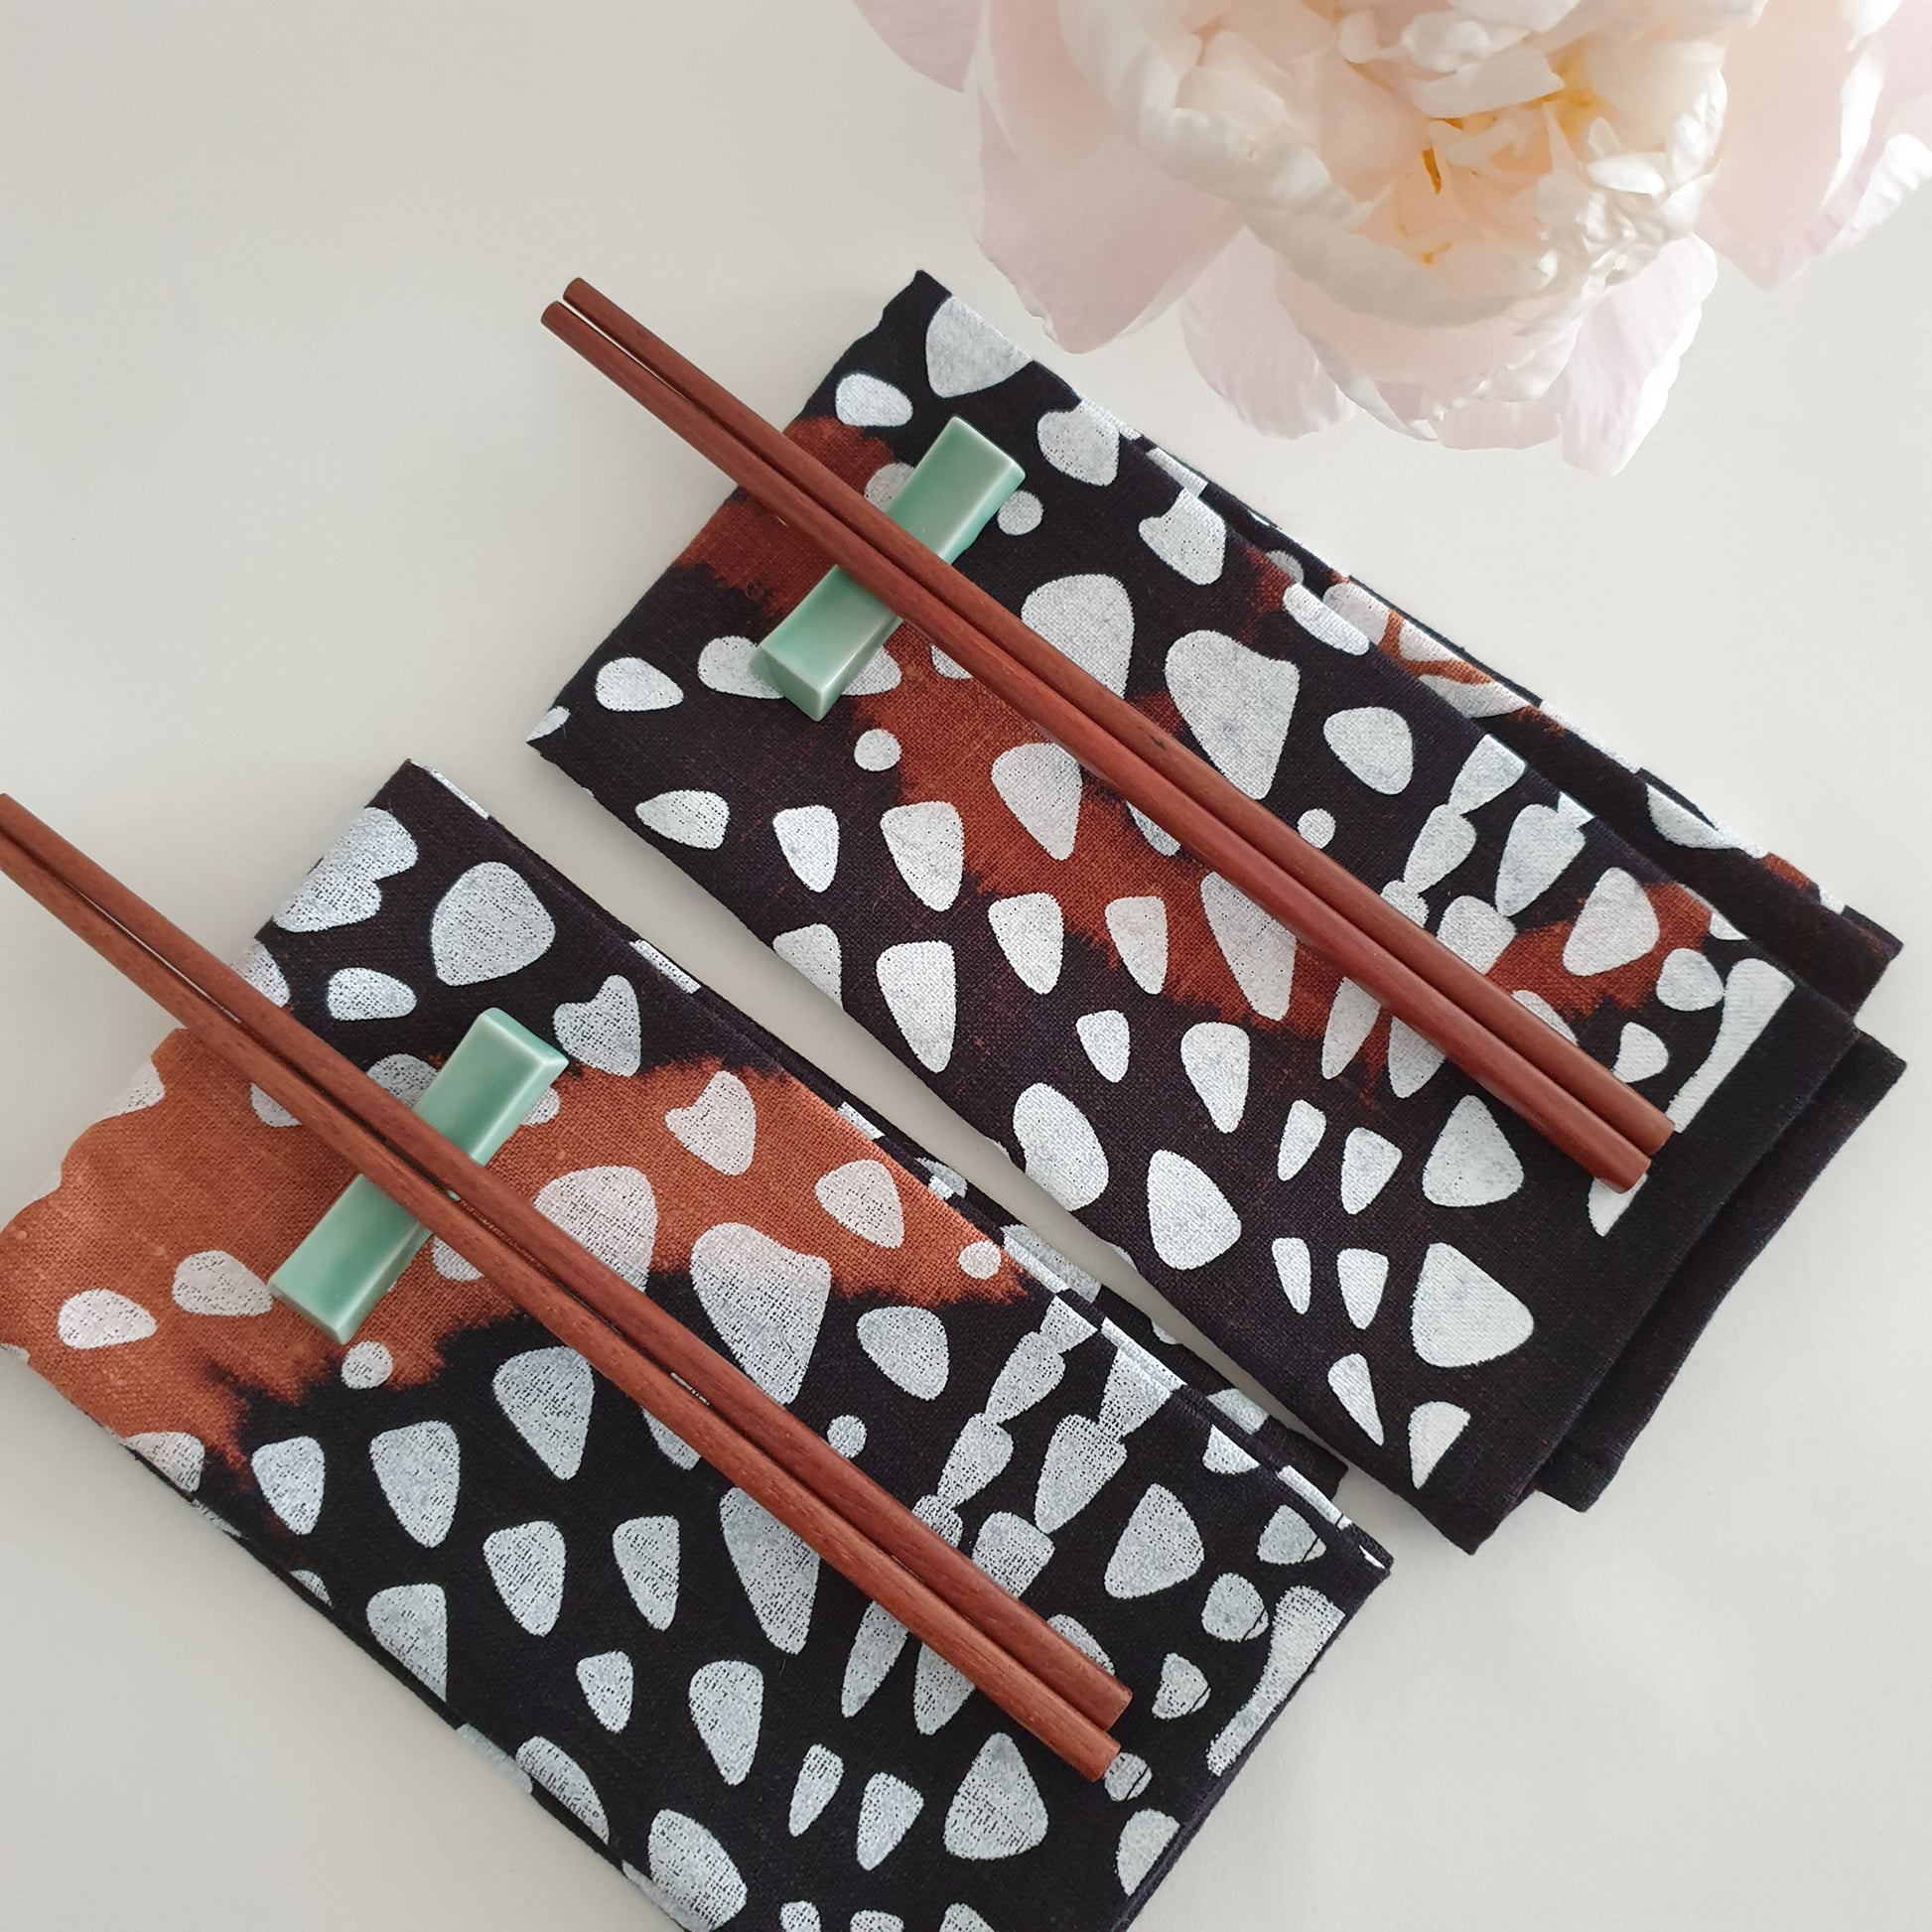 Linen serviettes photographed with chopsticks